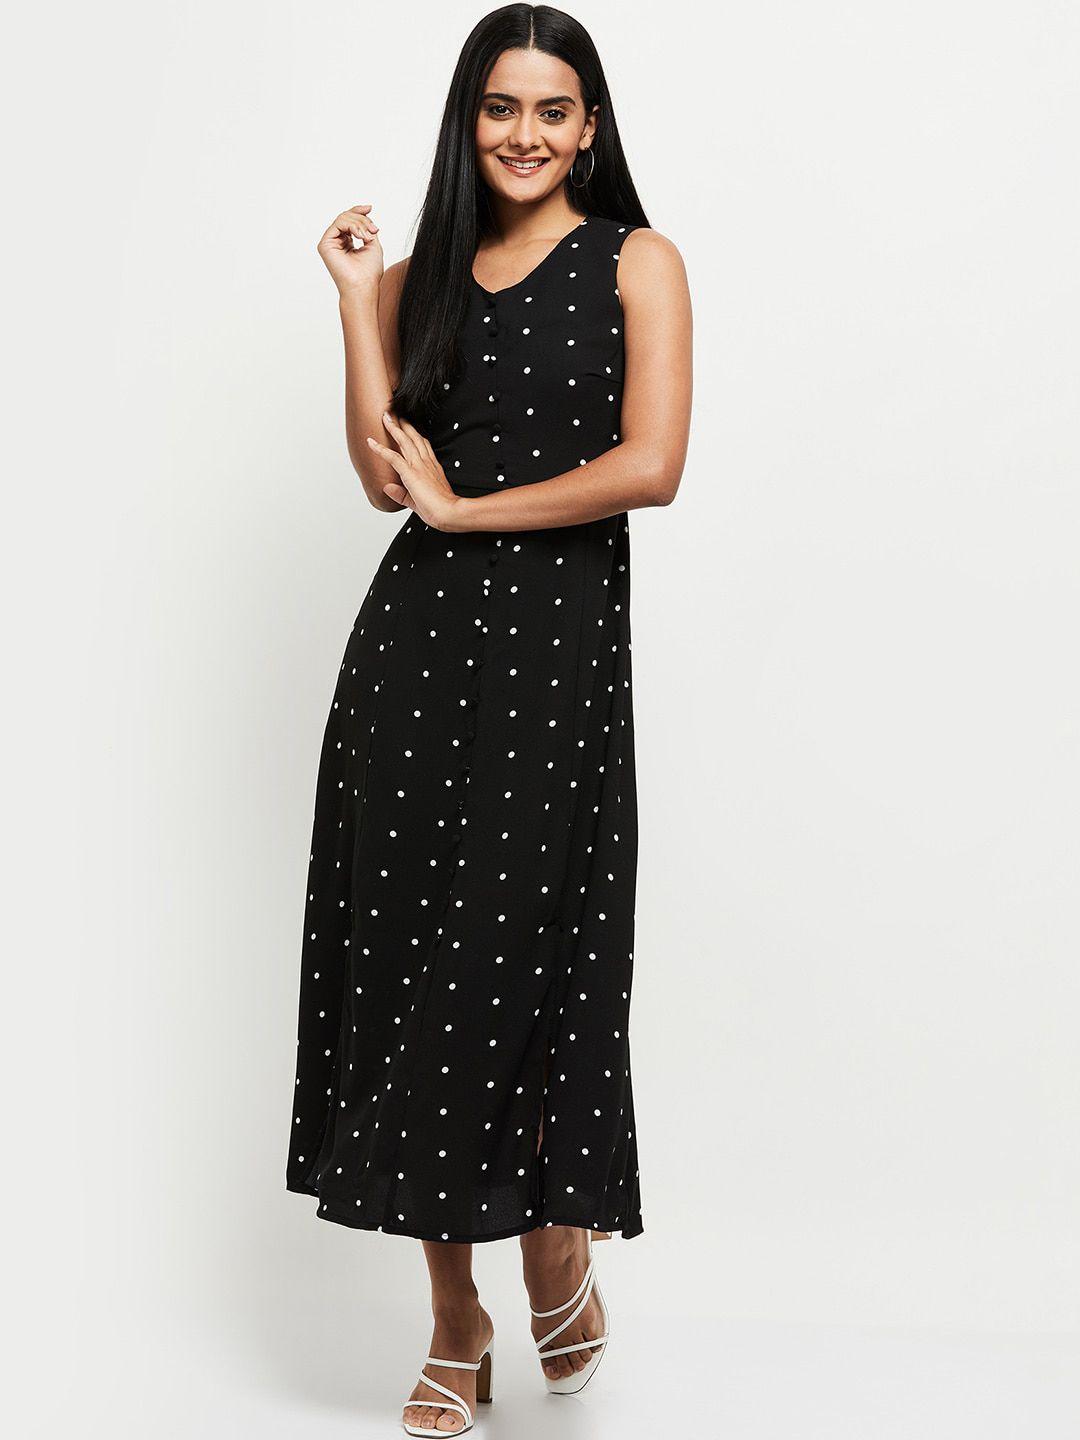 max women black polka dot printed fit & flare dress